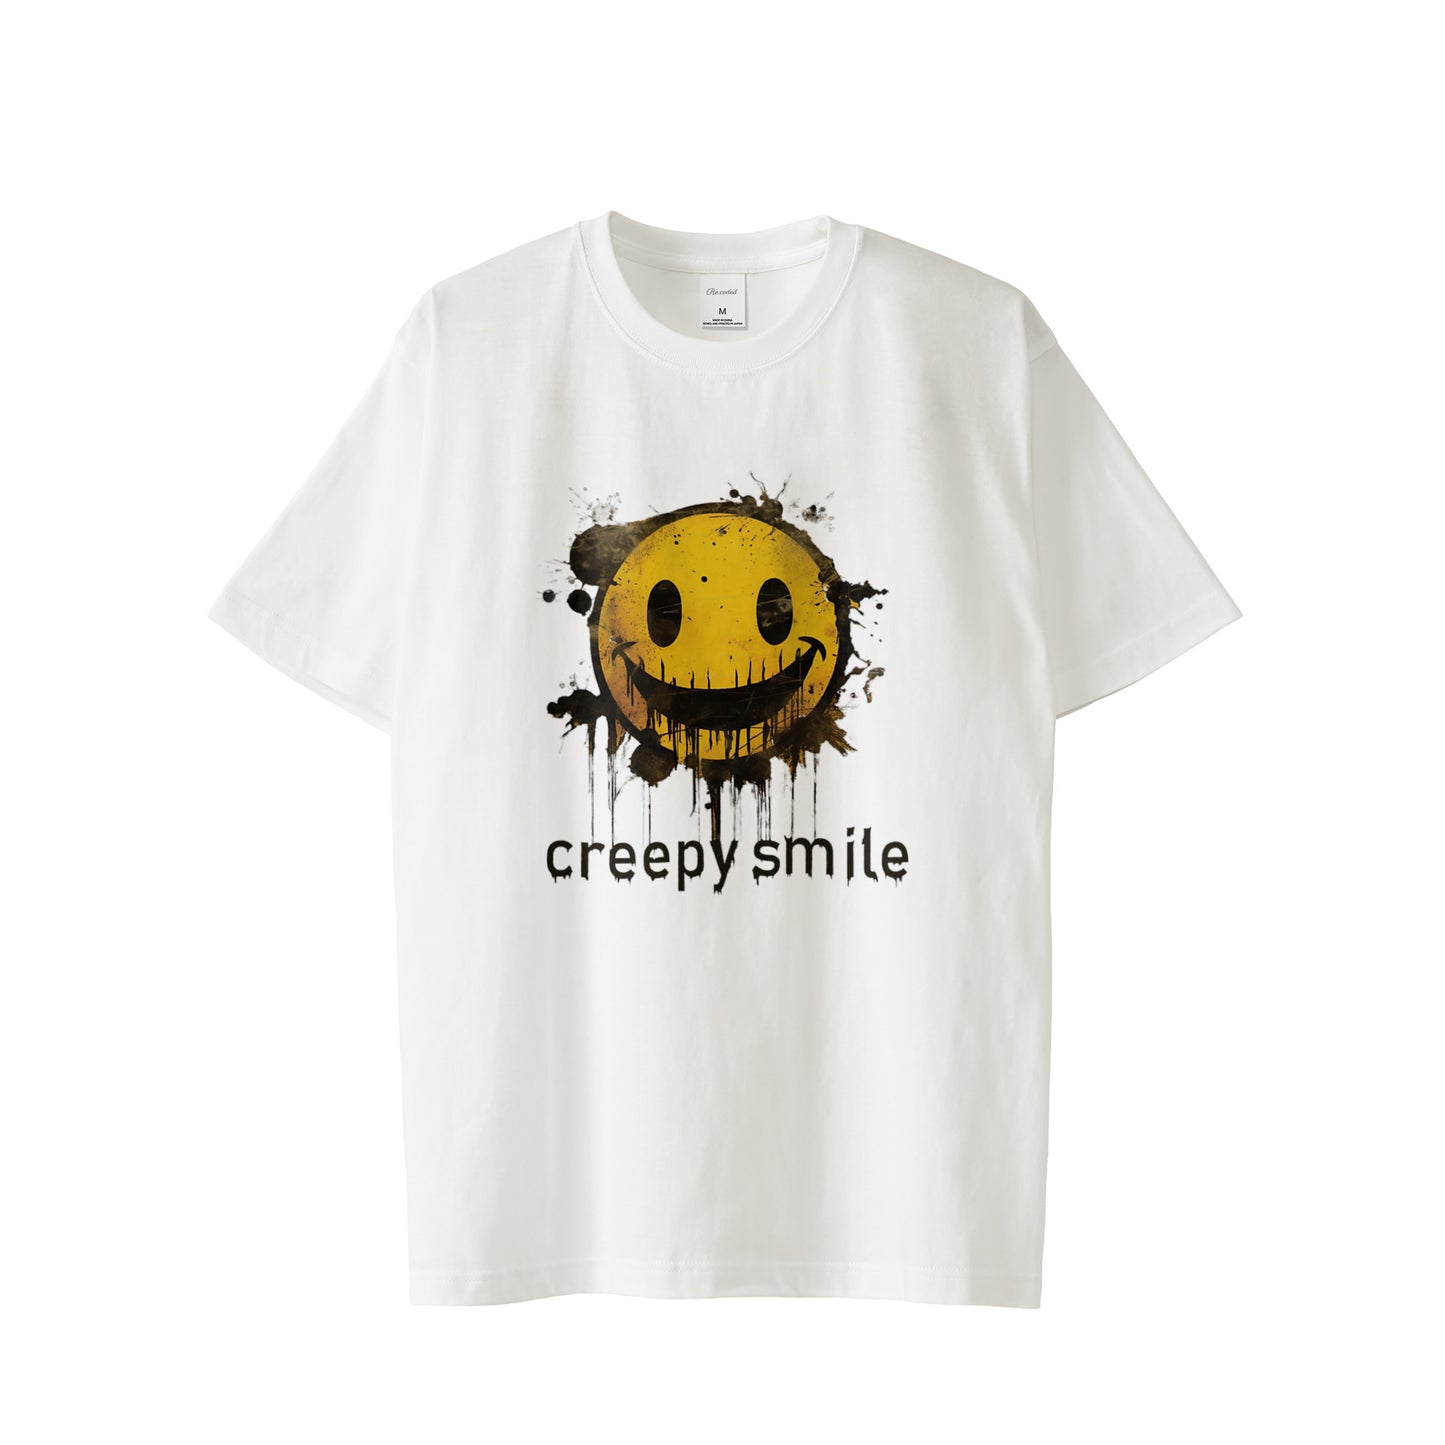 T-shirt  "creepy smile"